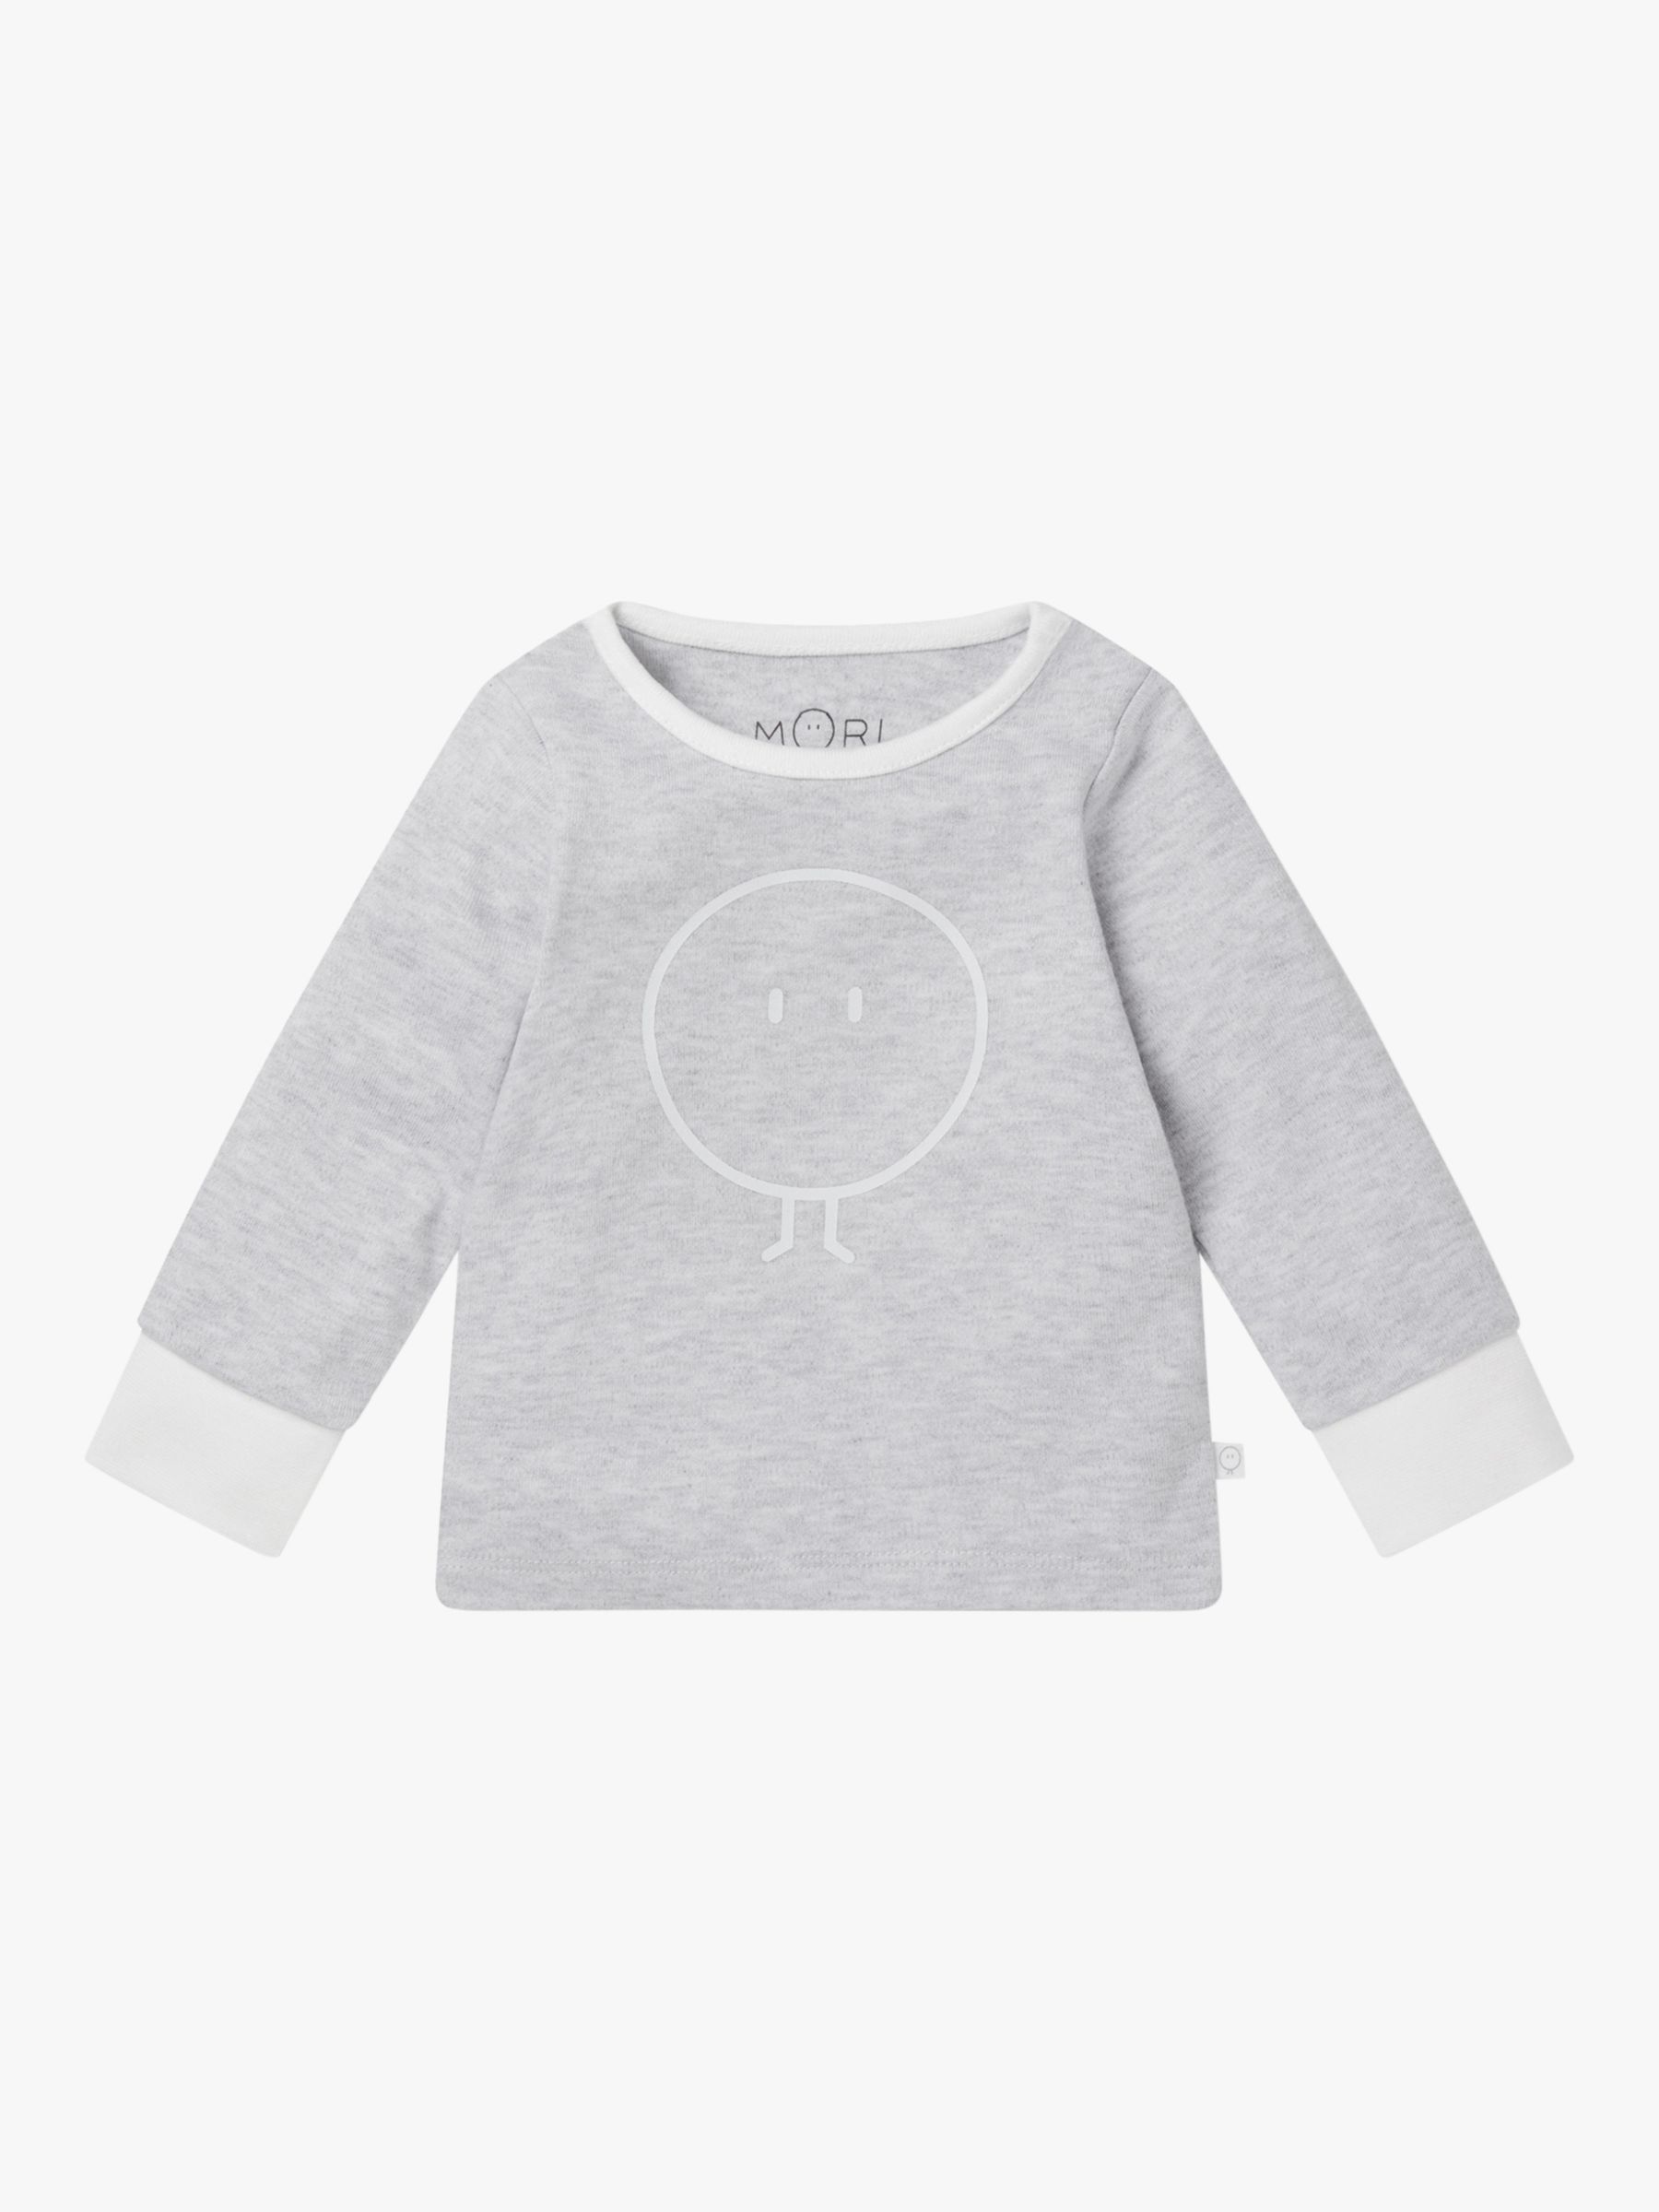 Buy MORI Baby Snoozy Pyjamas, Grey Online at johnlewis.com